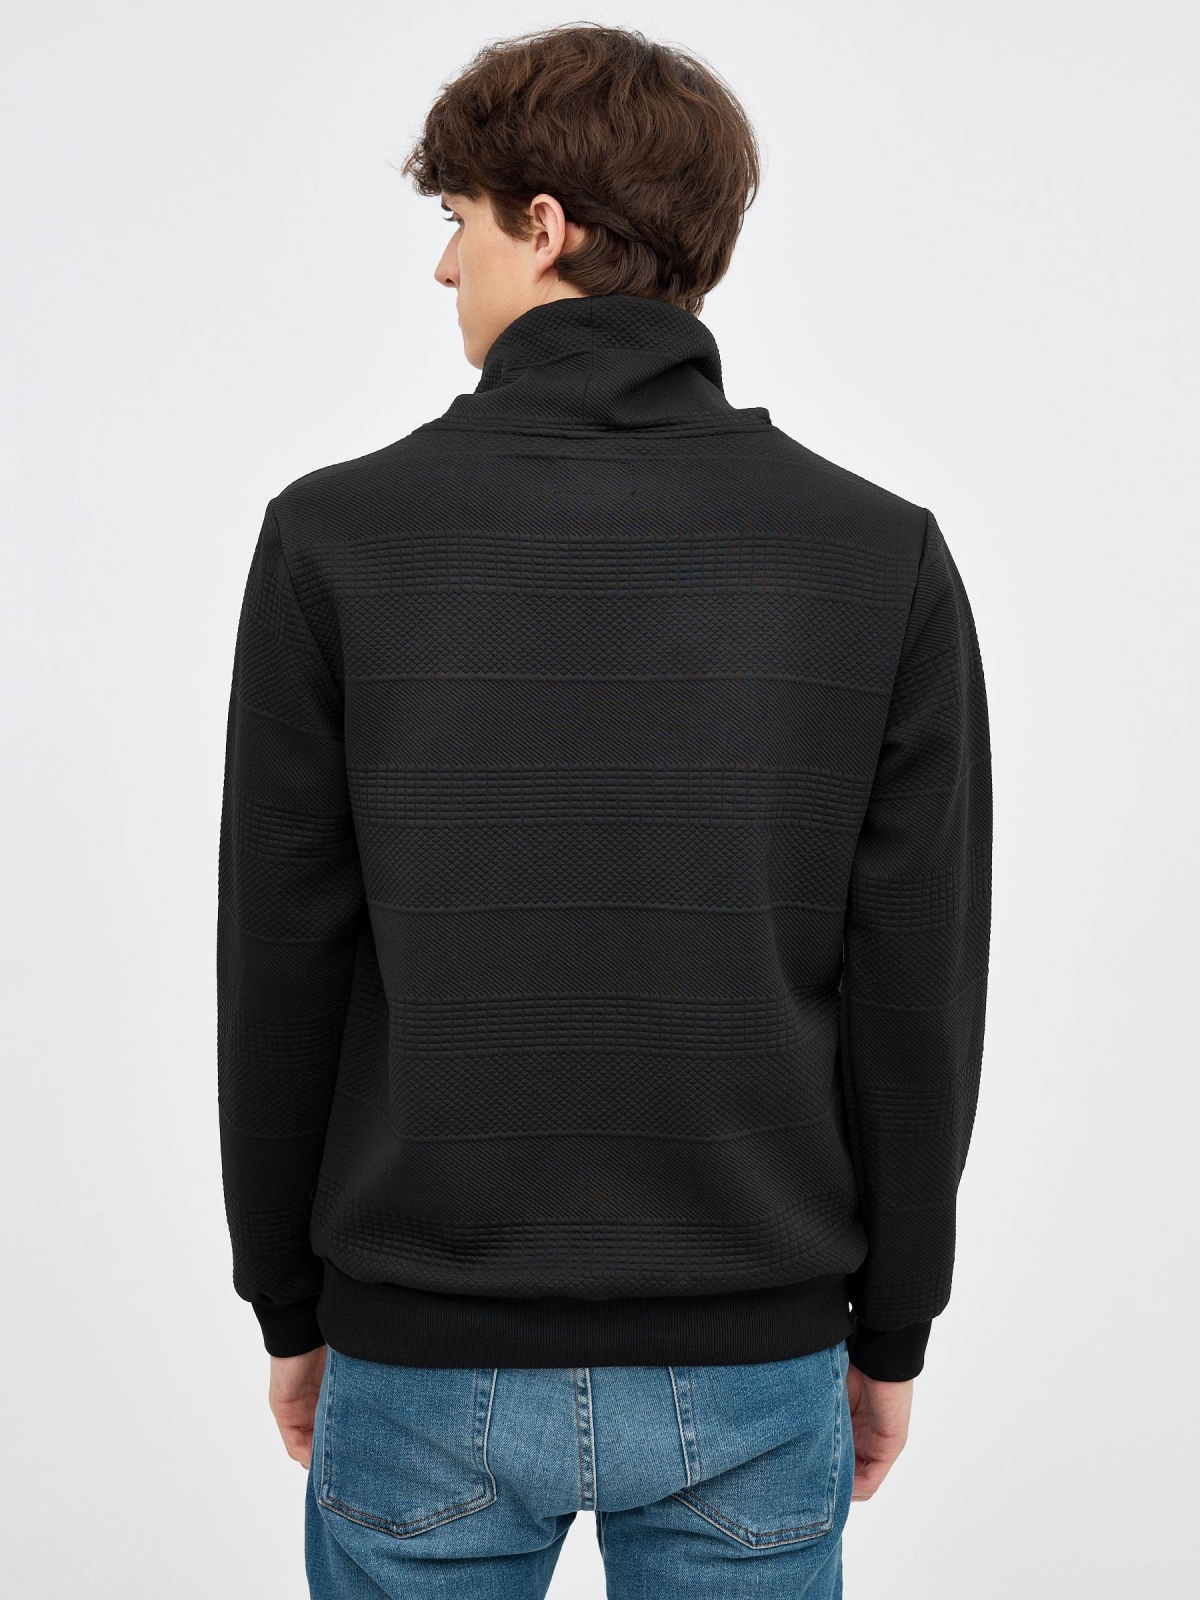 Sweatshirt de gola redonda texturada preto vista meia traseira